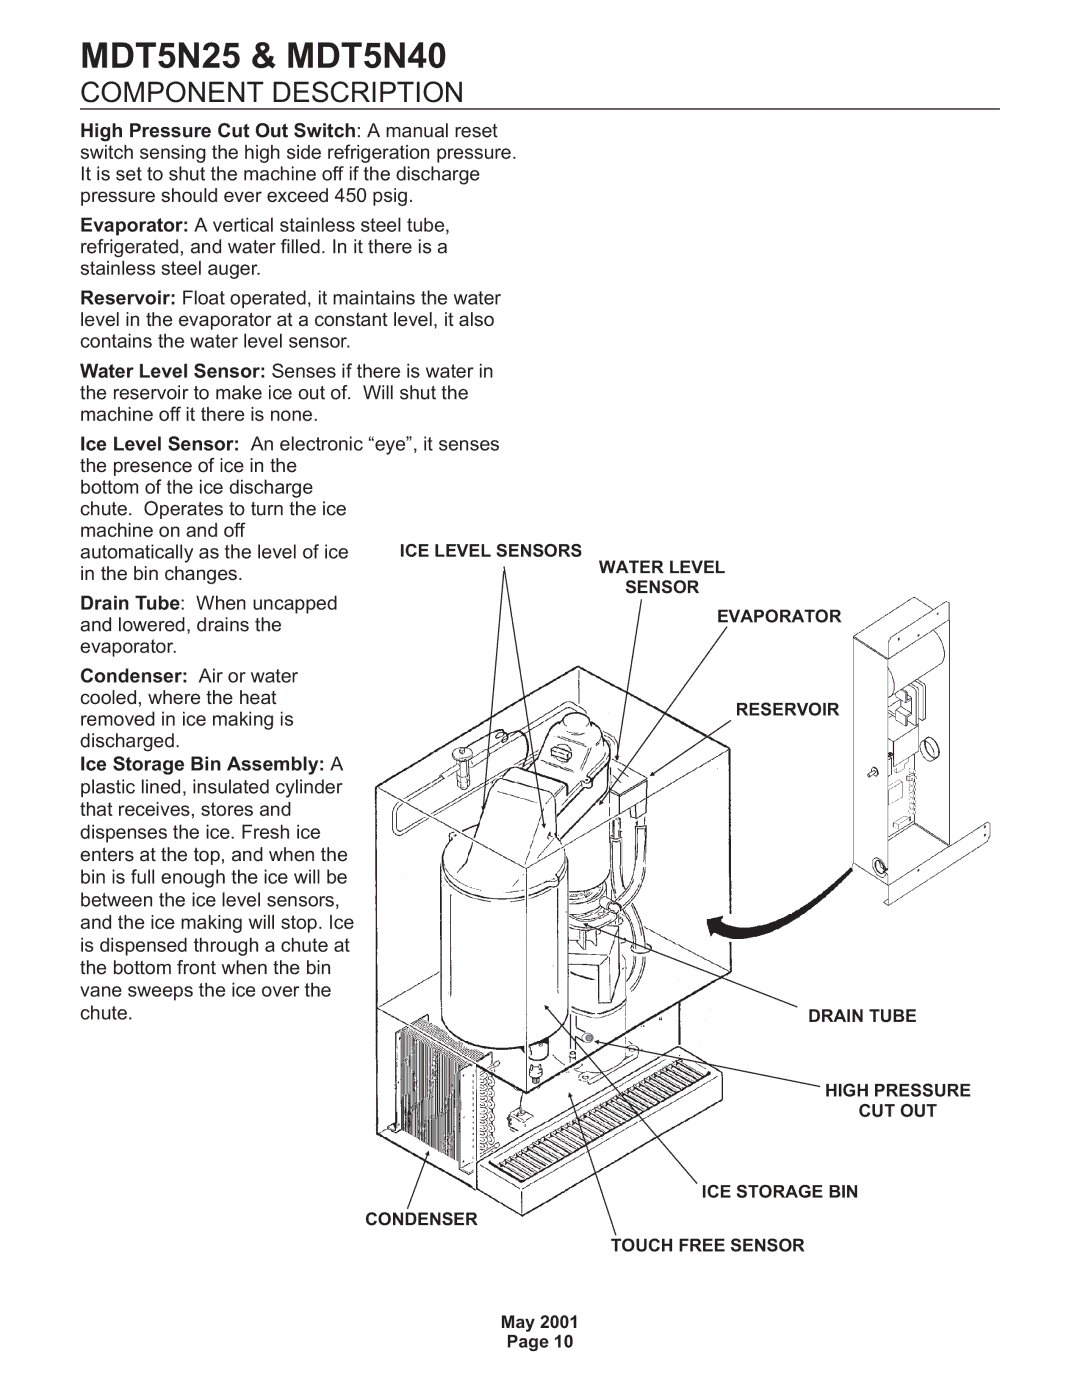 Scotsman Ice MDT5N25, MDT5N40 service manual Component Description 